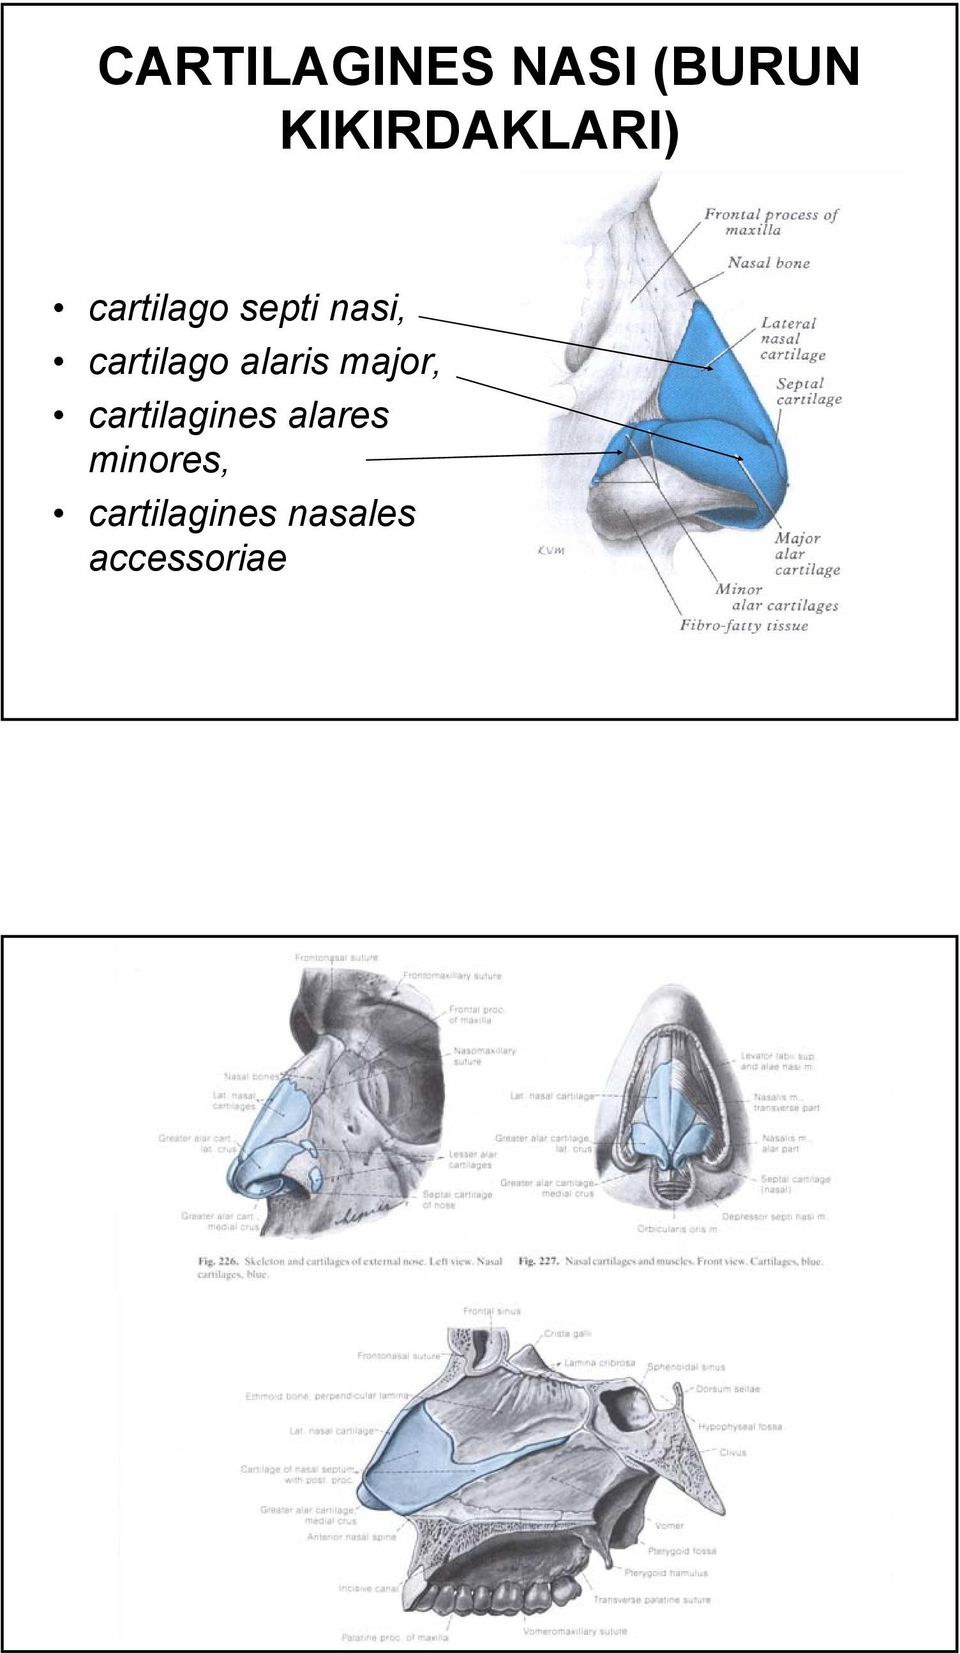 cartilago alaris major, cartilagines